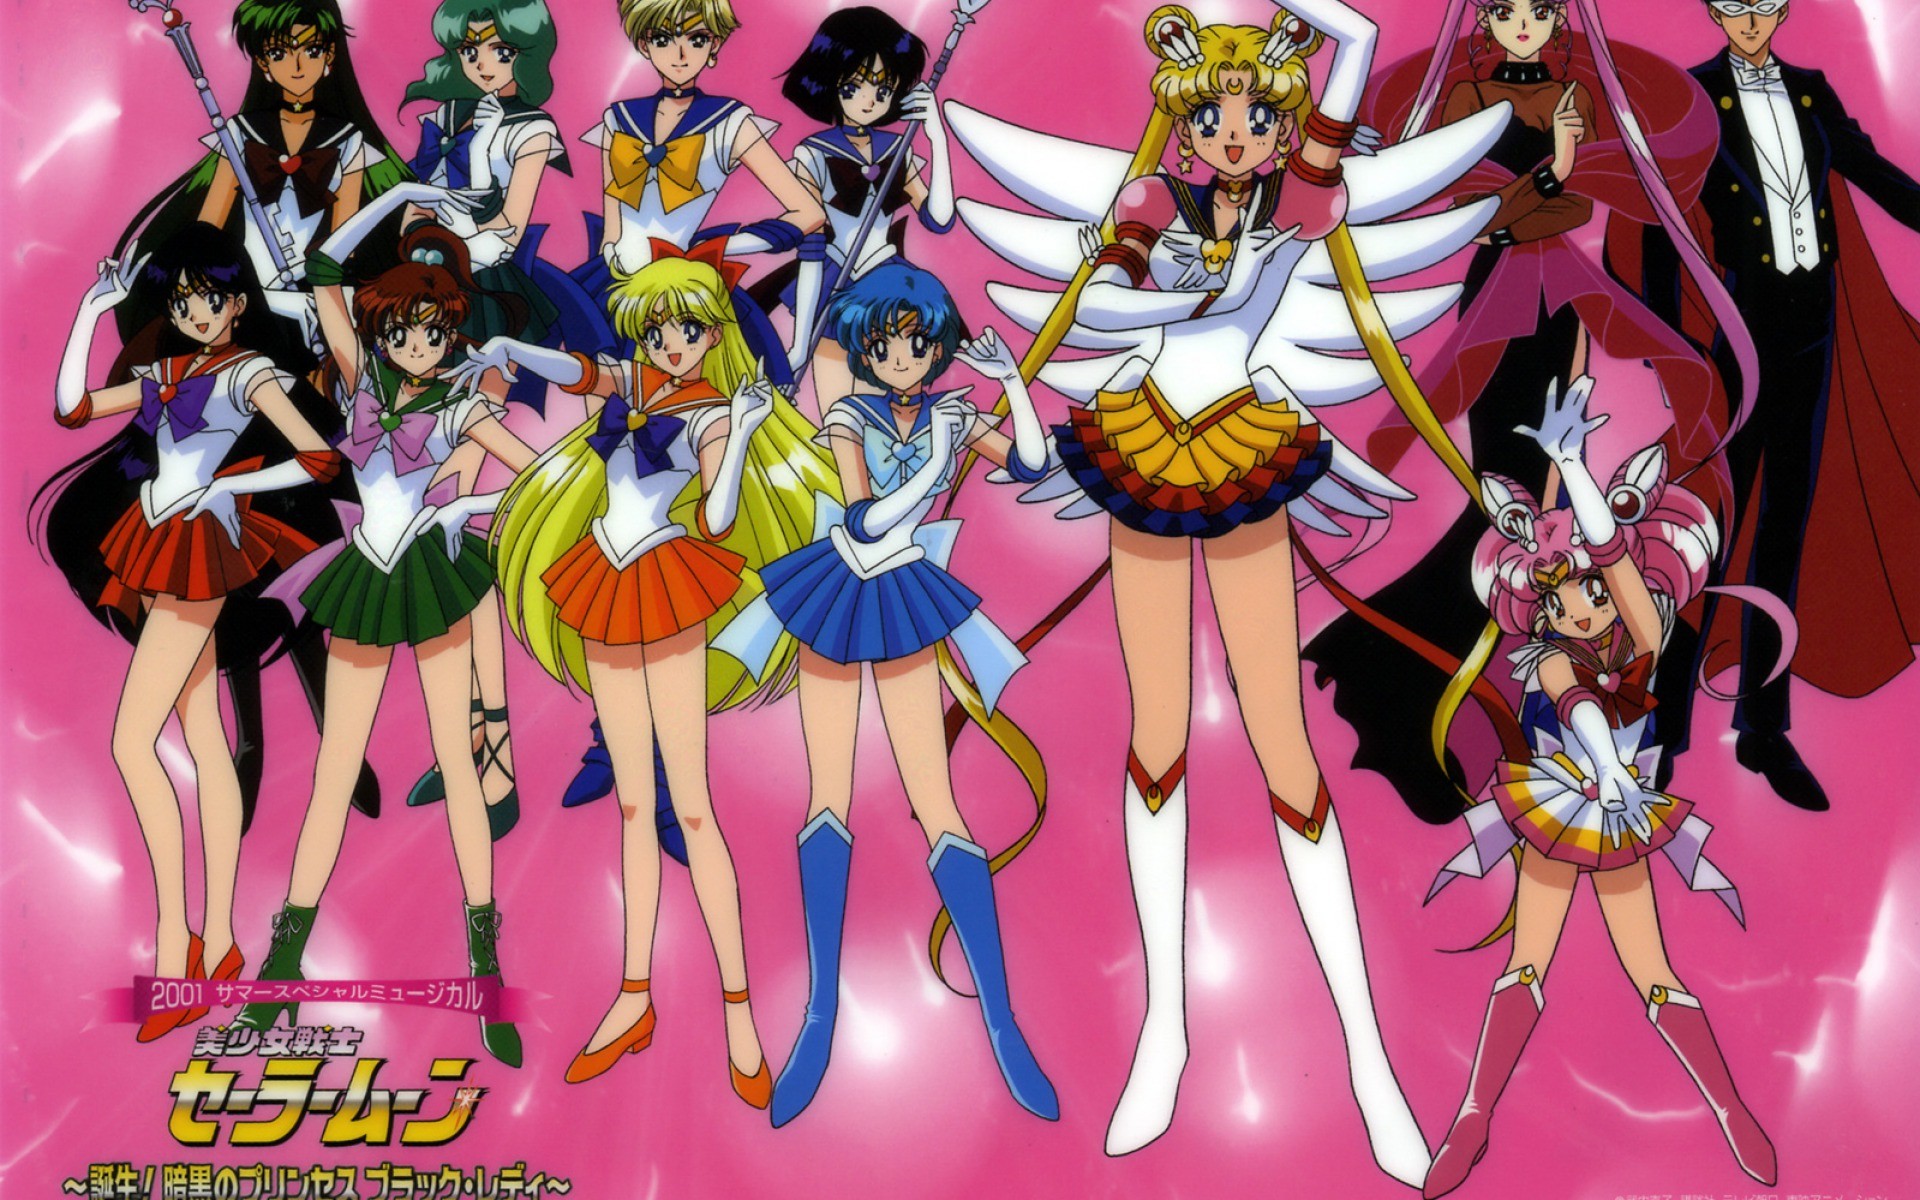 1920x1200 Sailor Moon 11 wallpapers | Sailor Moon 11 stock photos